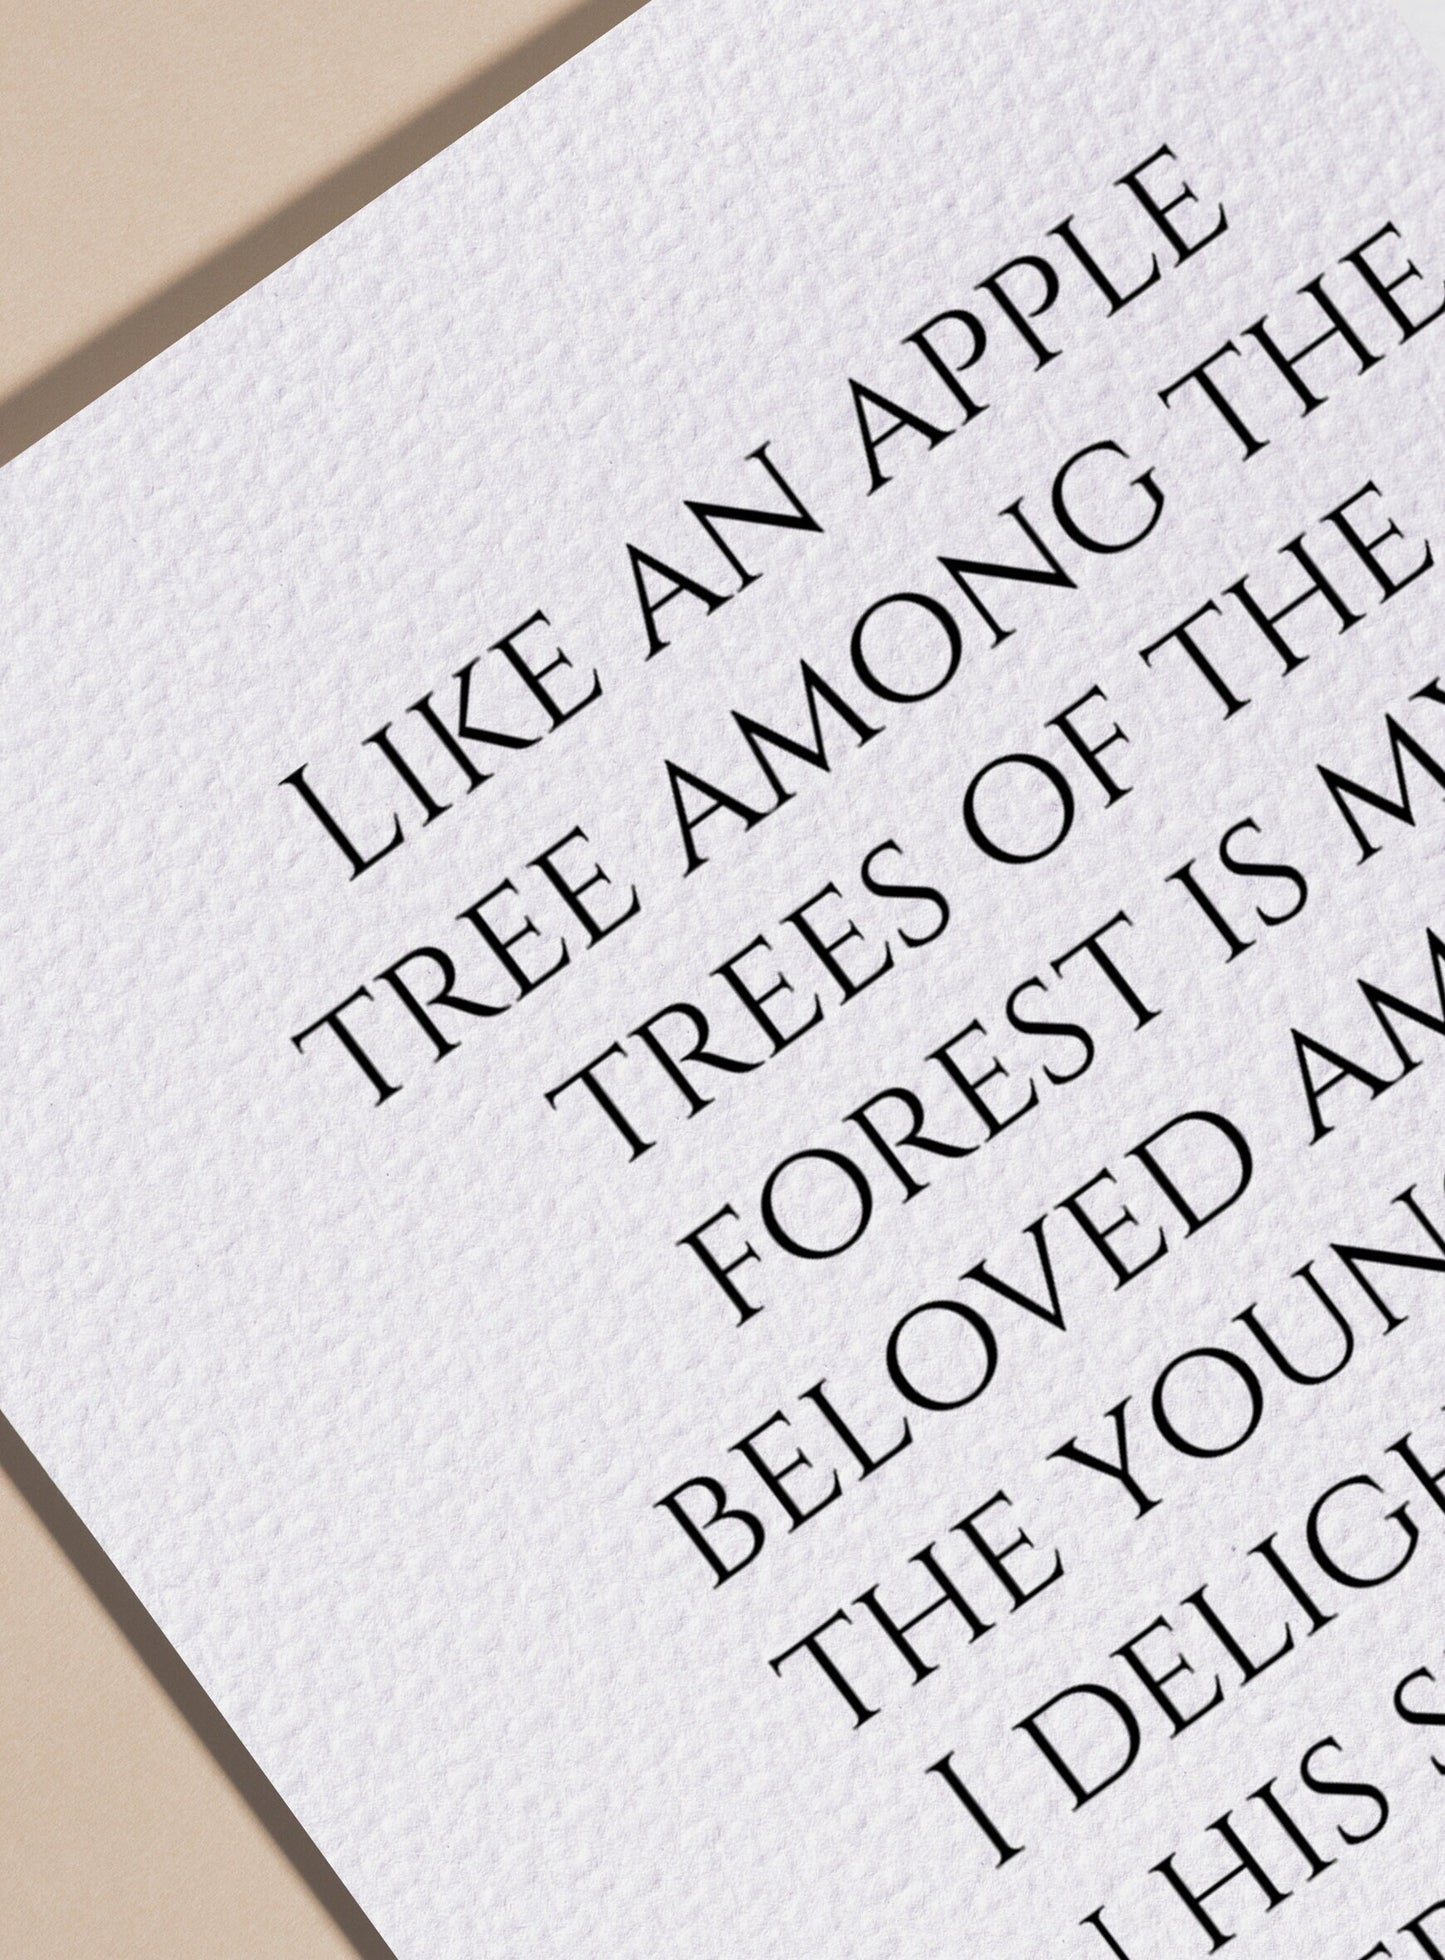 Song of Solomon 2:3 Like an apple tree Bible Verse Print, Bible Scripture Typography Verse - Framed Prayer - Prayer poster